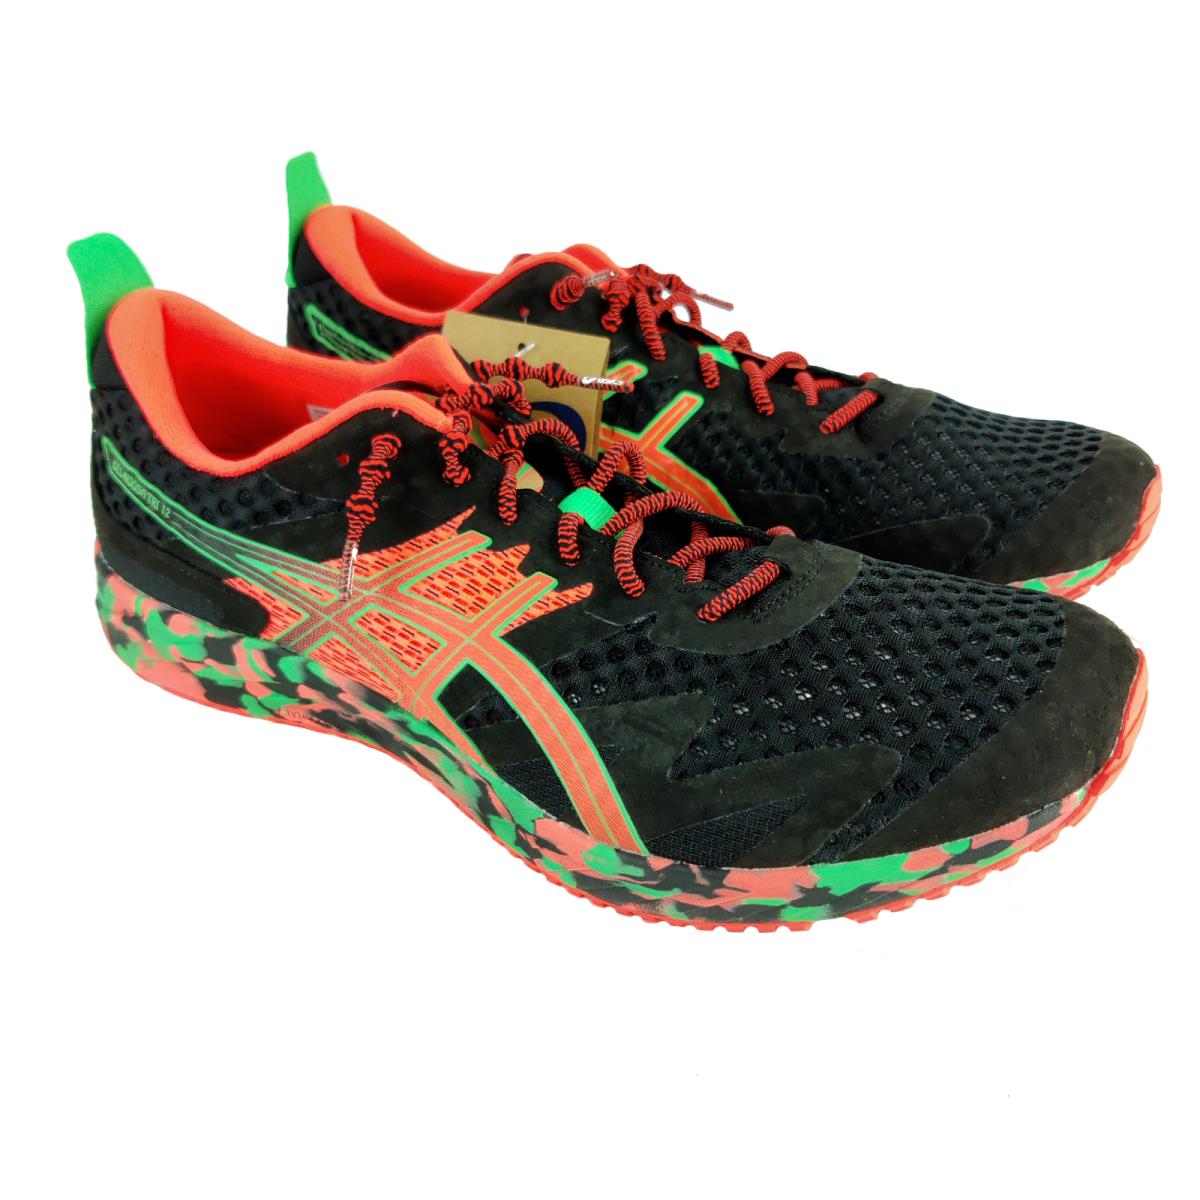 Asics Gel-noosa Tri 12 Running Shoes Black Pink Flash Coral Mens Size 11